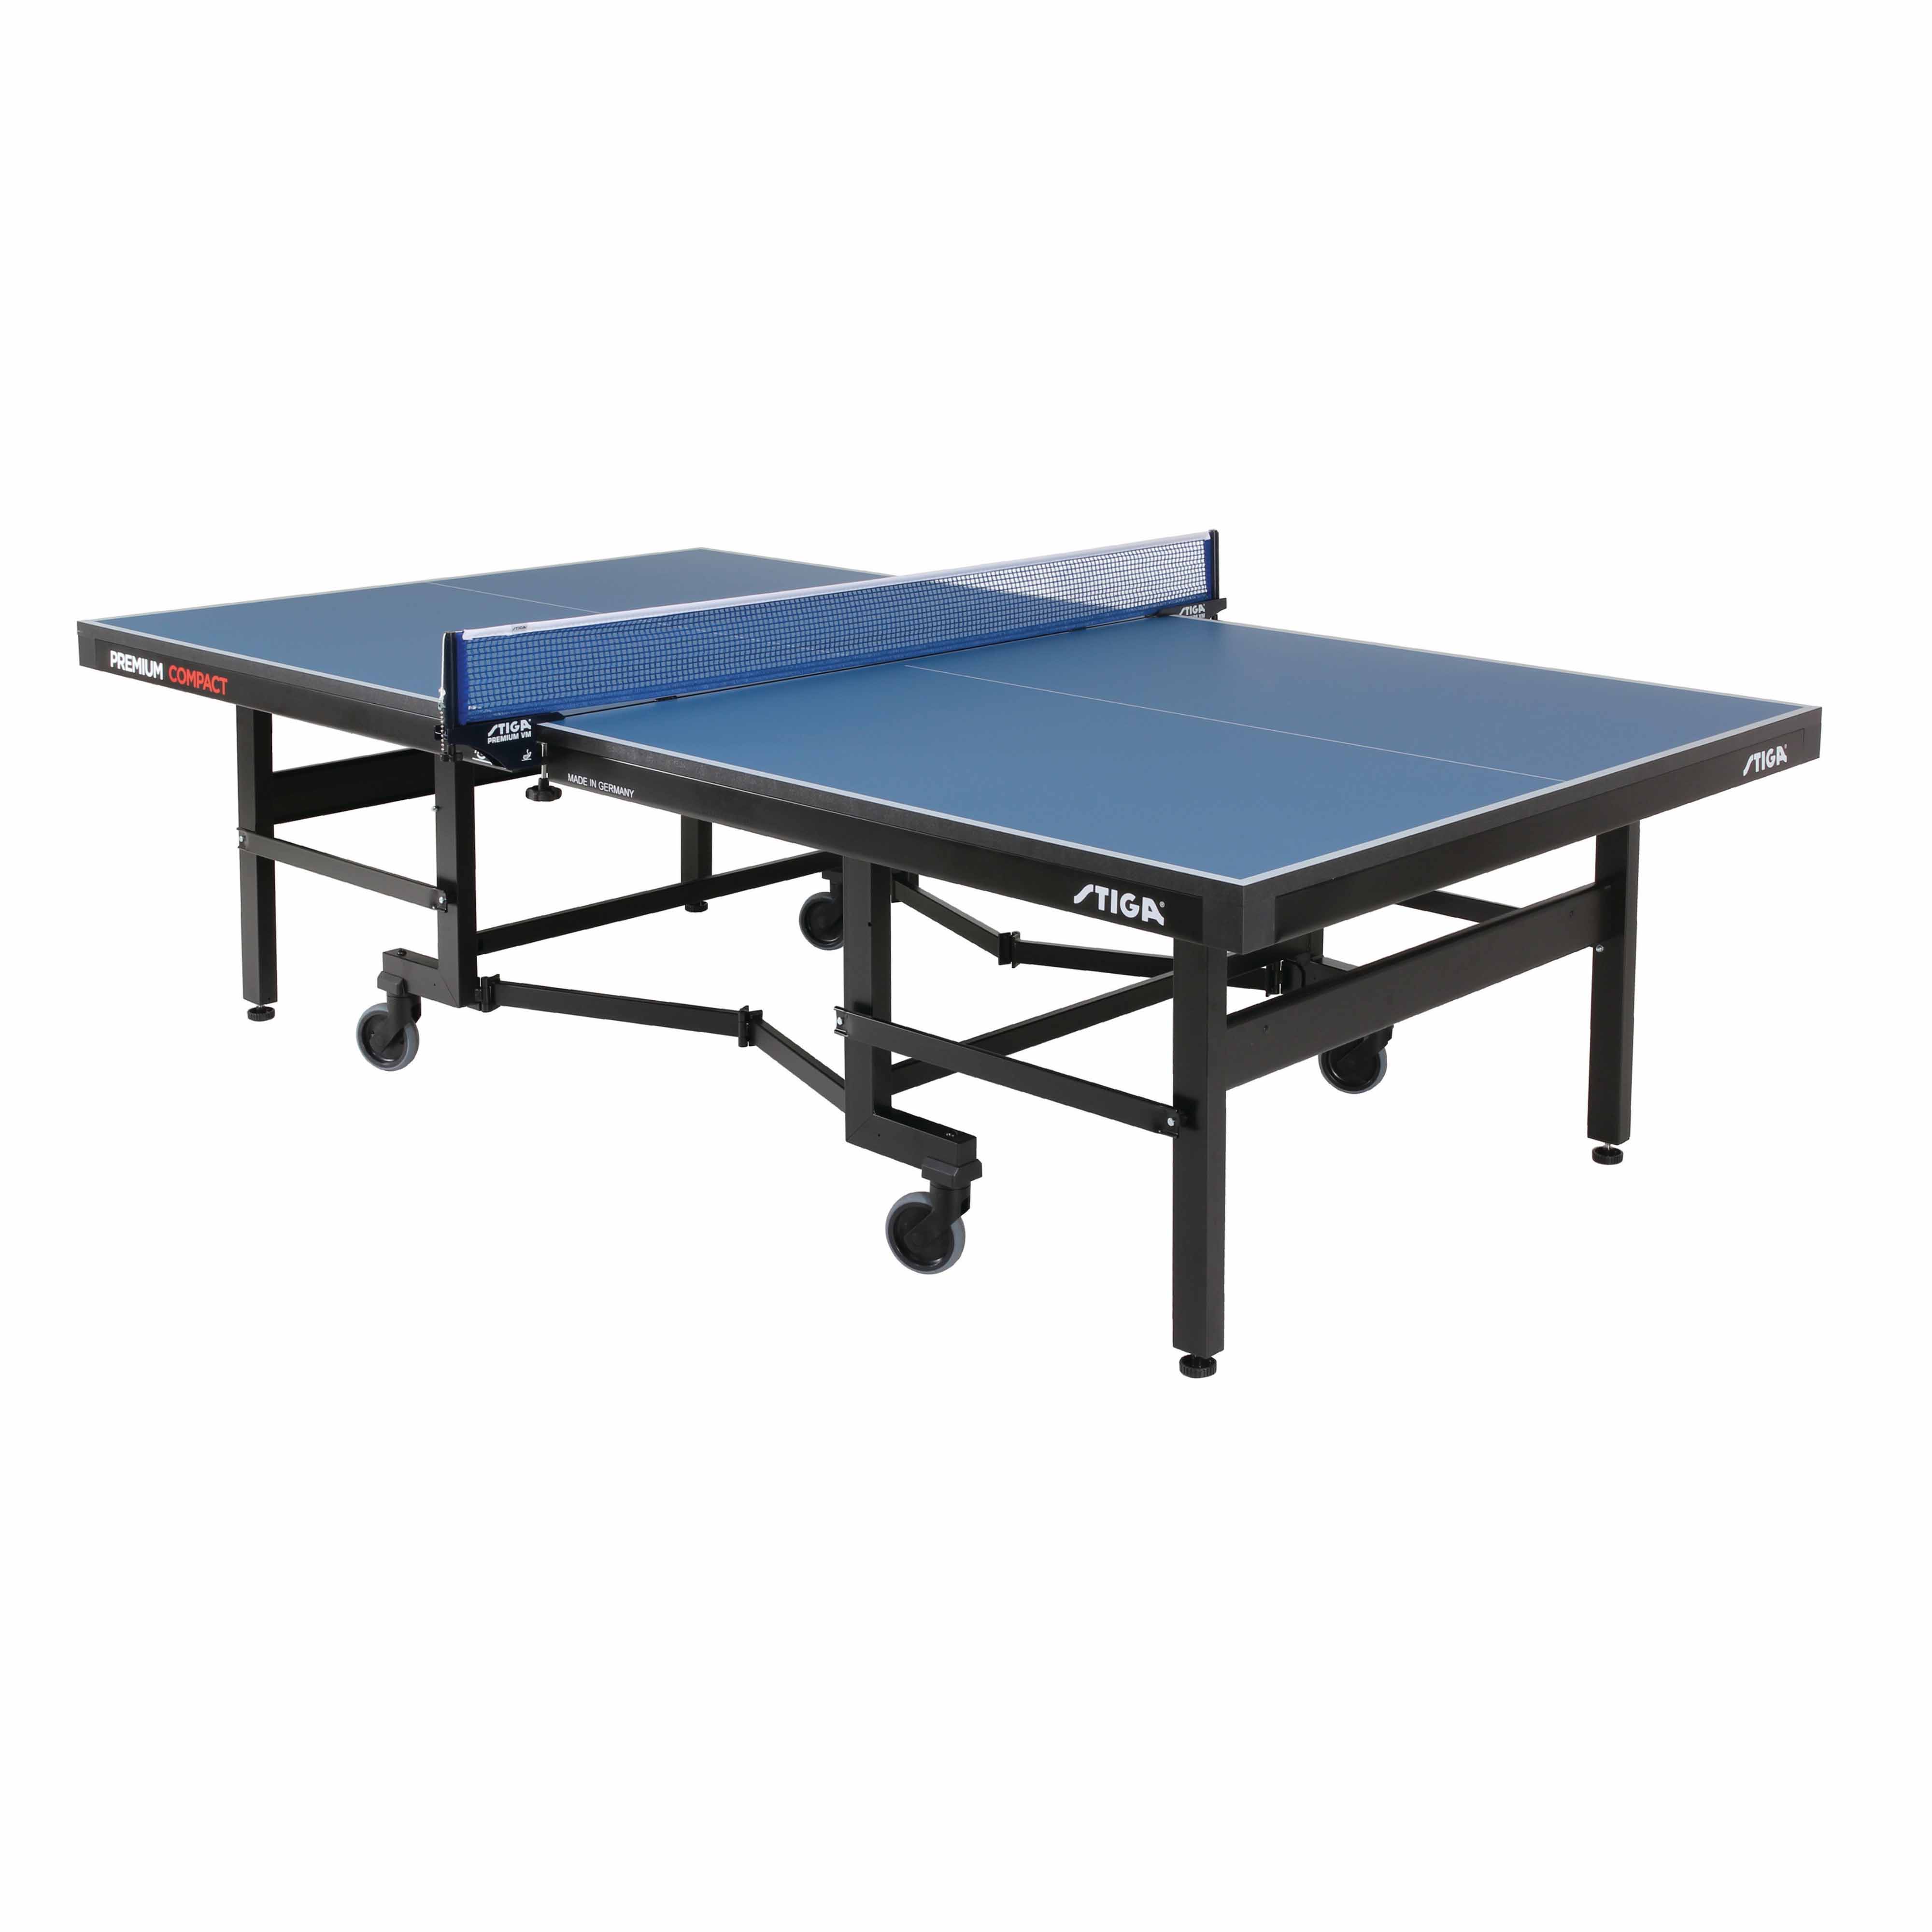 STIGA Premium Compact Ping Pong Table STIGA US